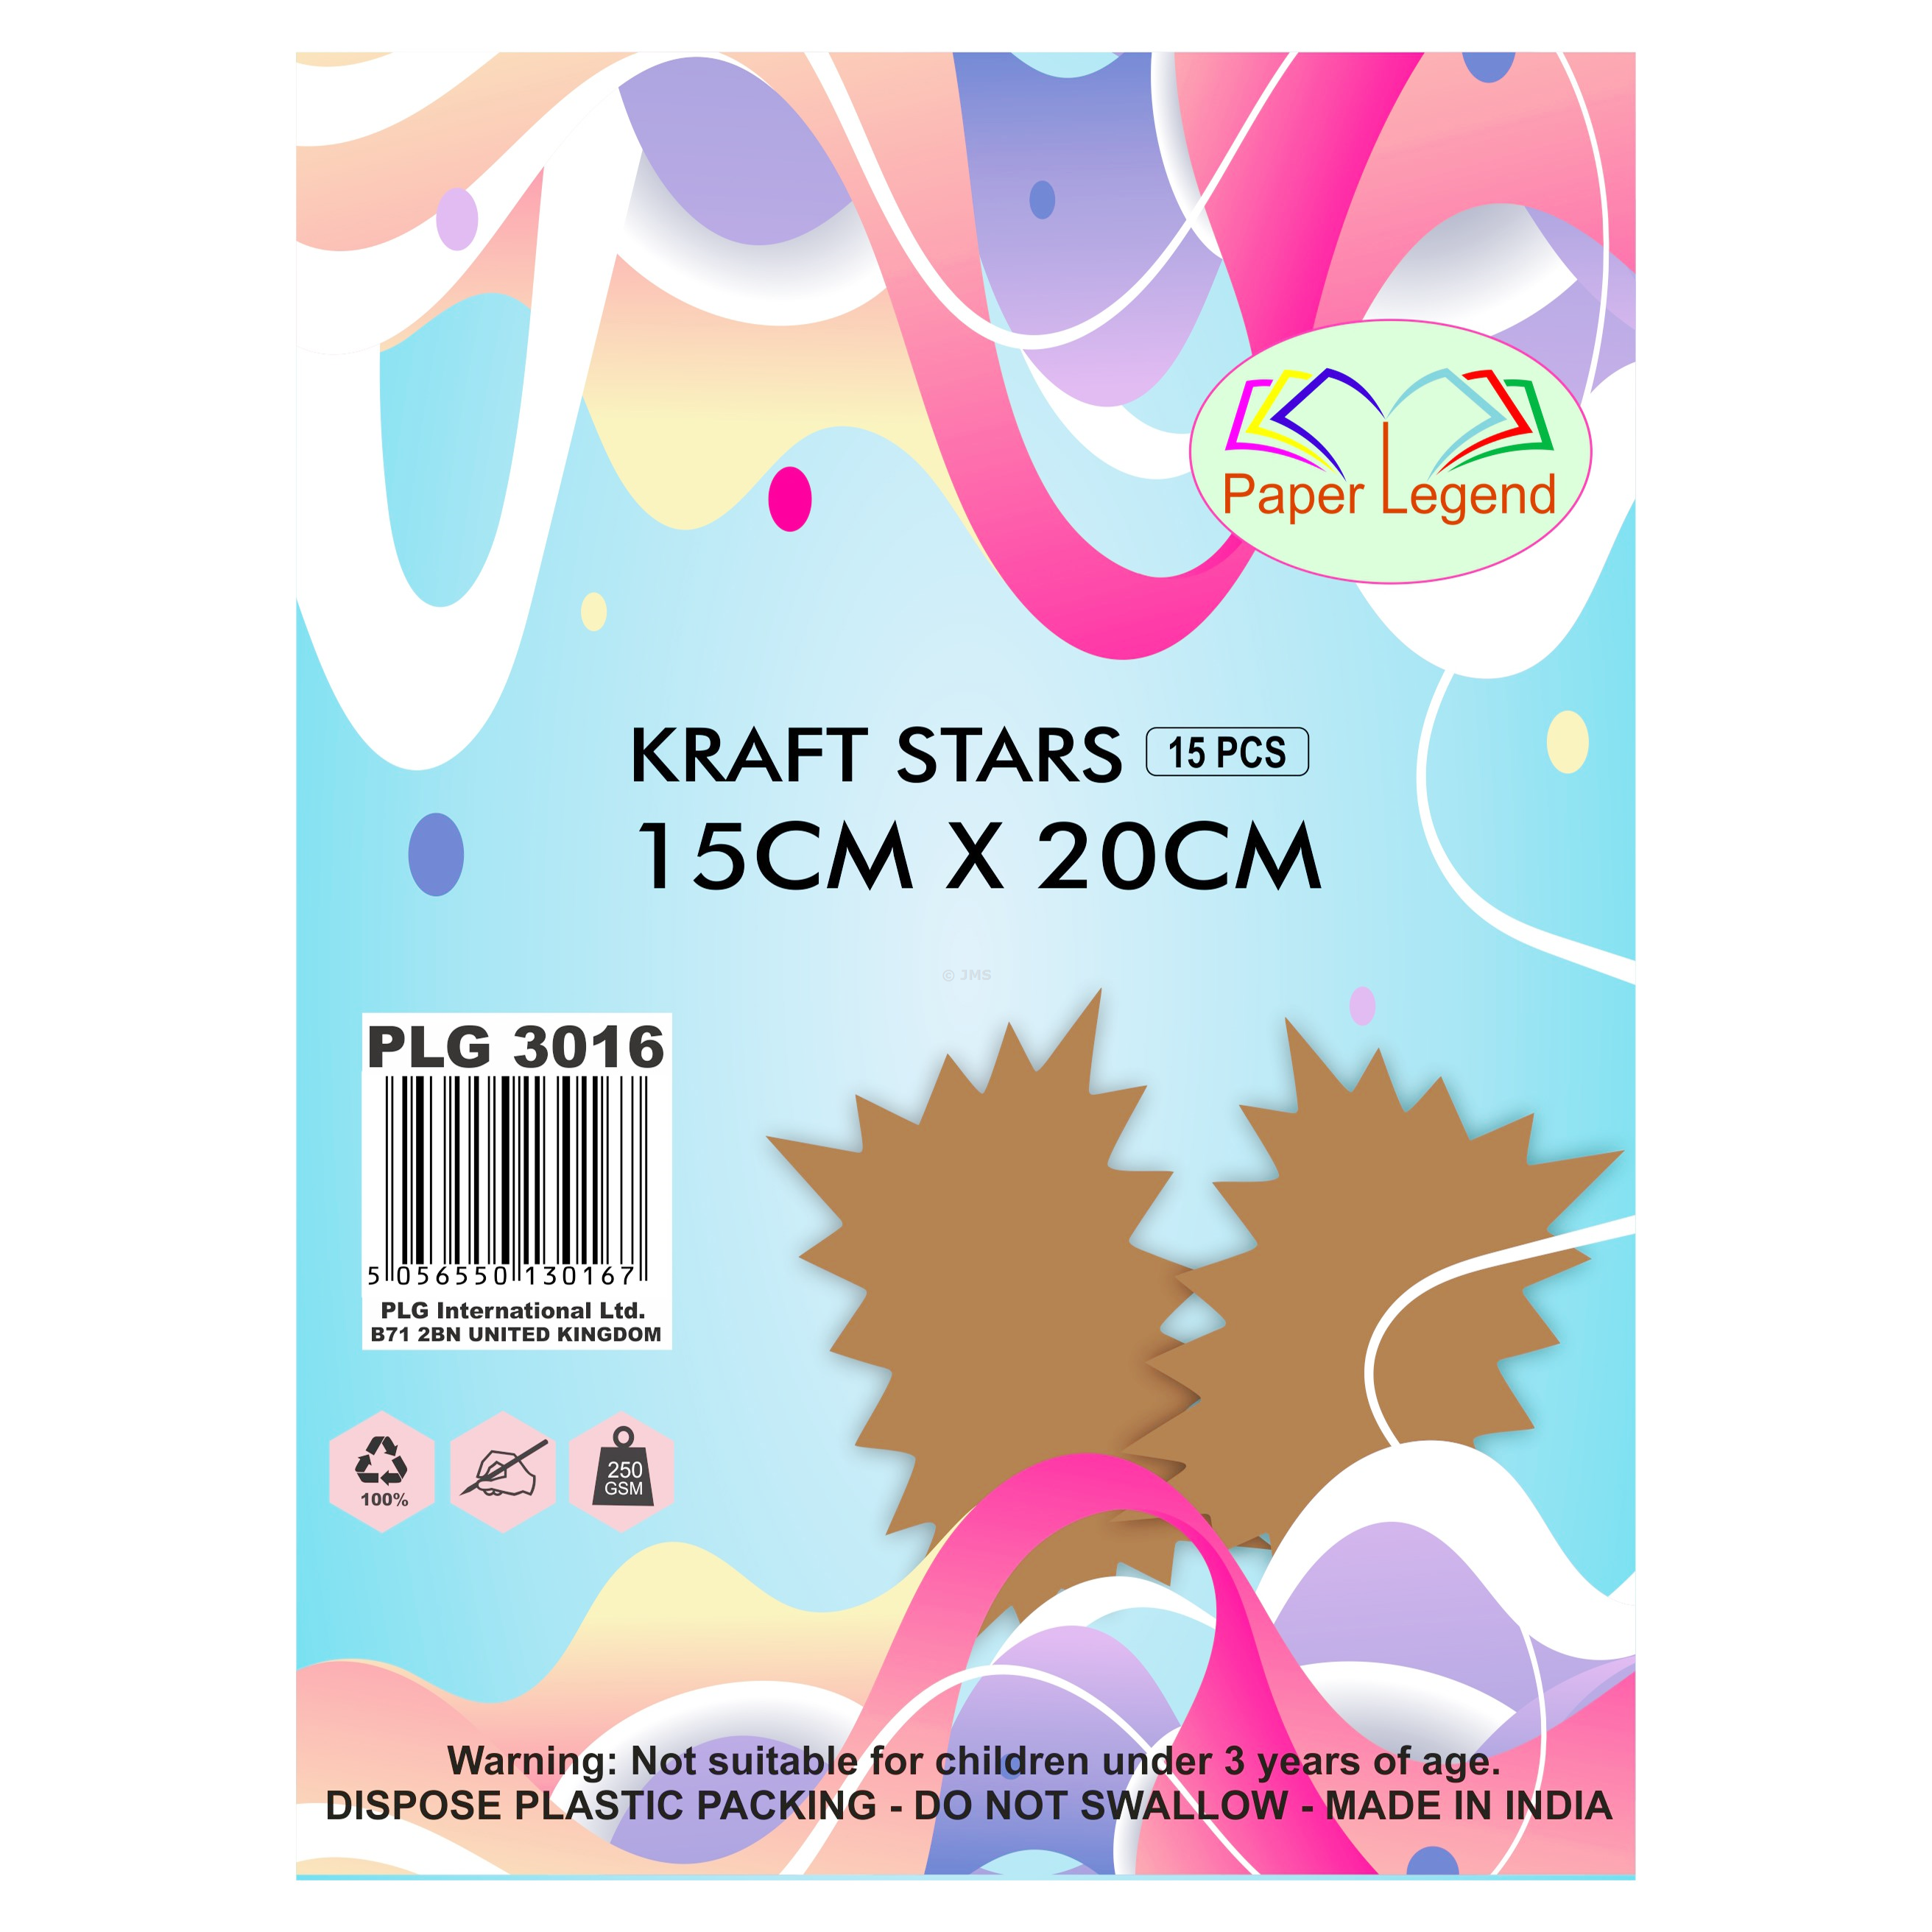 Starburst 15 pcs Rectangle Star 15 cm x 20 cm Kraft Paper 230 gsm Retail Shop Sale Sign Gift Tag Label